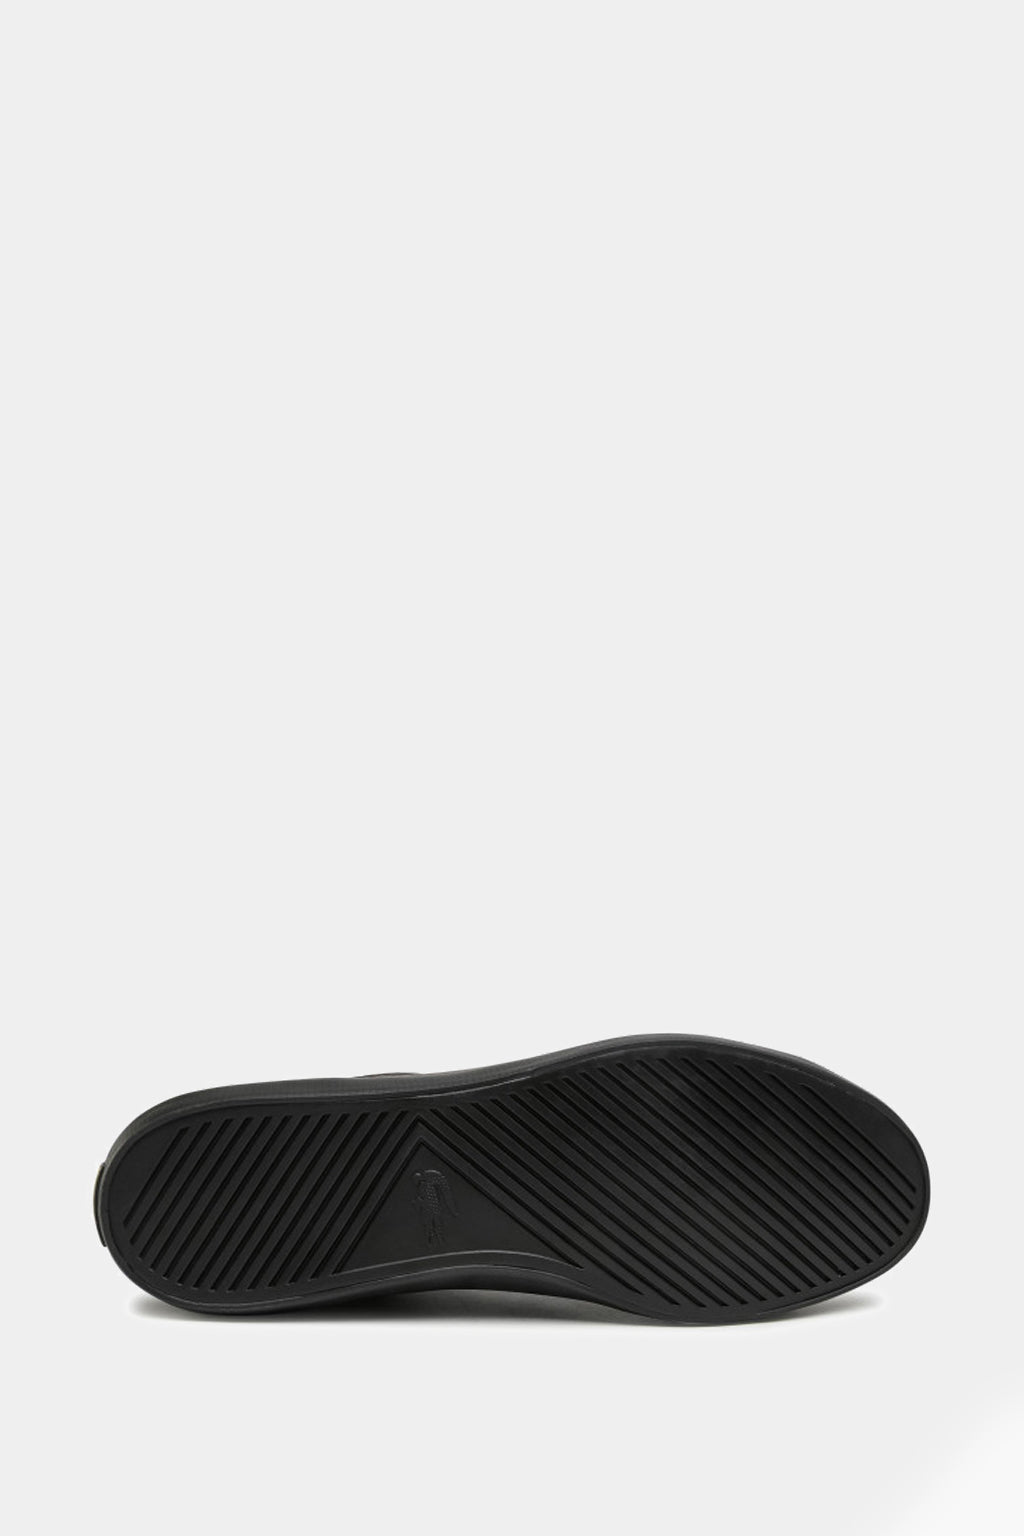 Lacoste - Men's Lerond Sneakers Black